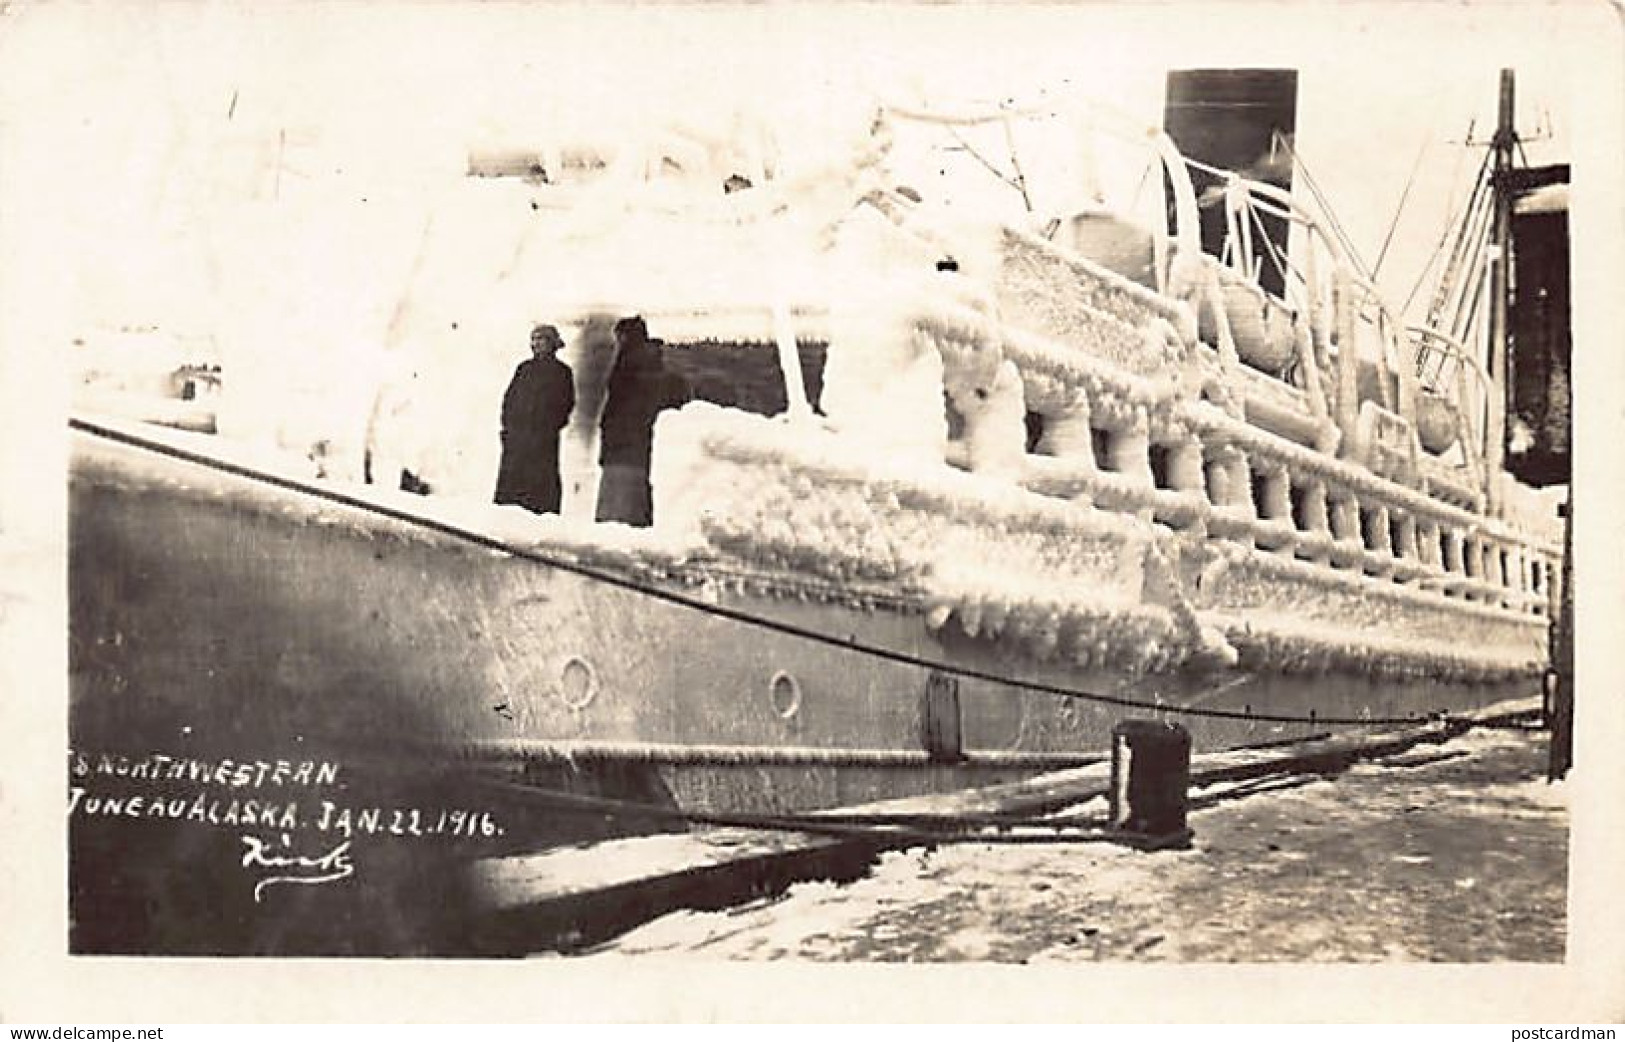 JUNEAU (AK) SS Northwestern - Jan. 22nd, 1916 - REAL PHOTO - Juneau